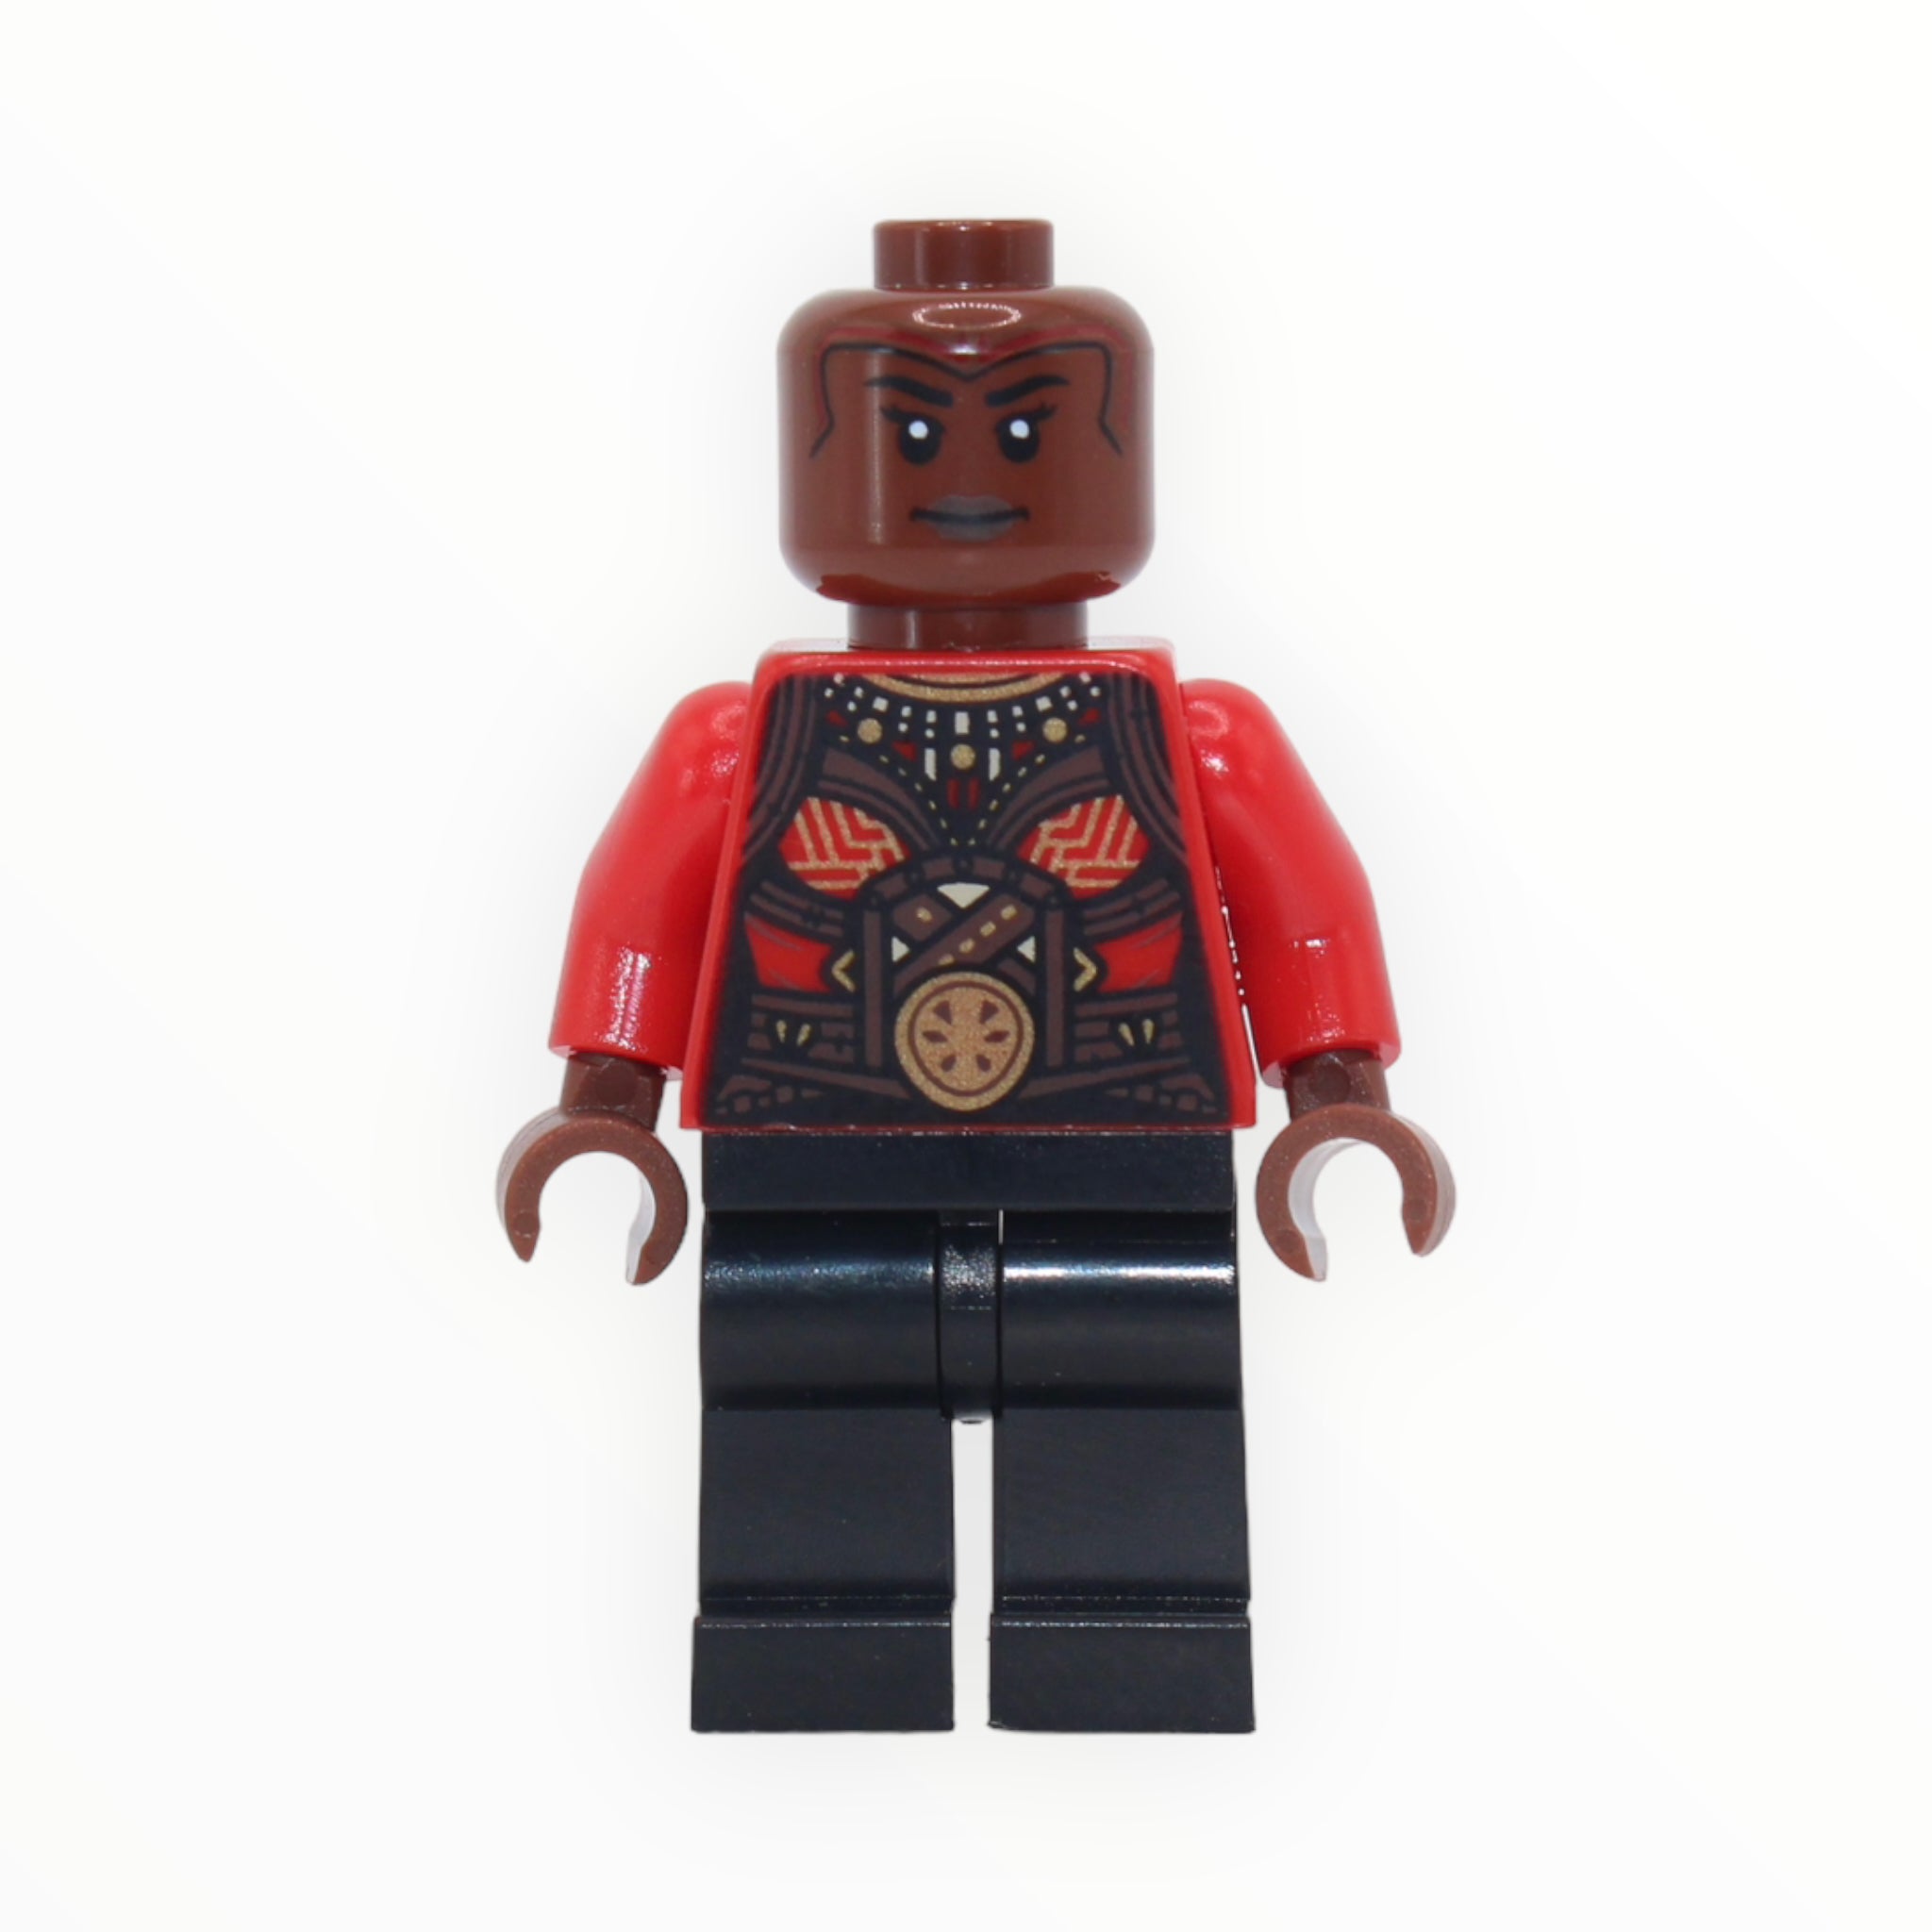 Okoye (red torso, 2022)